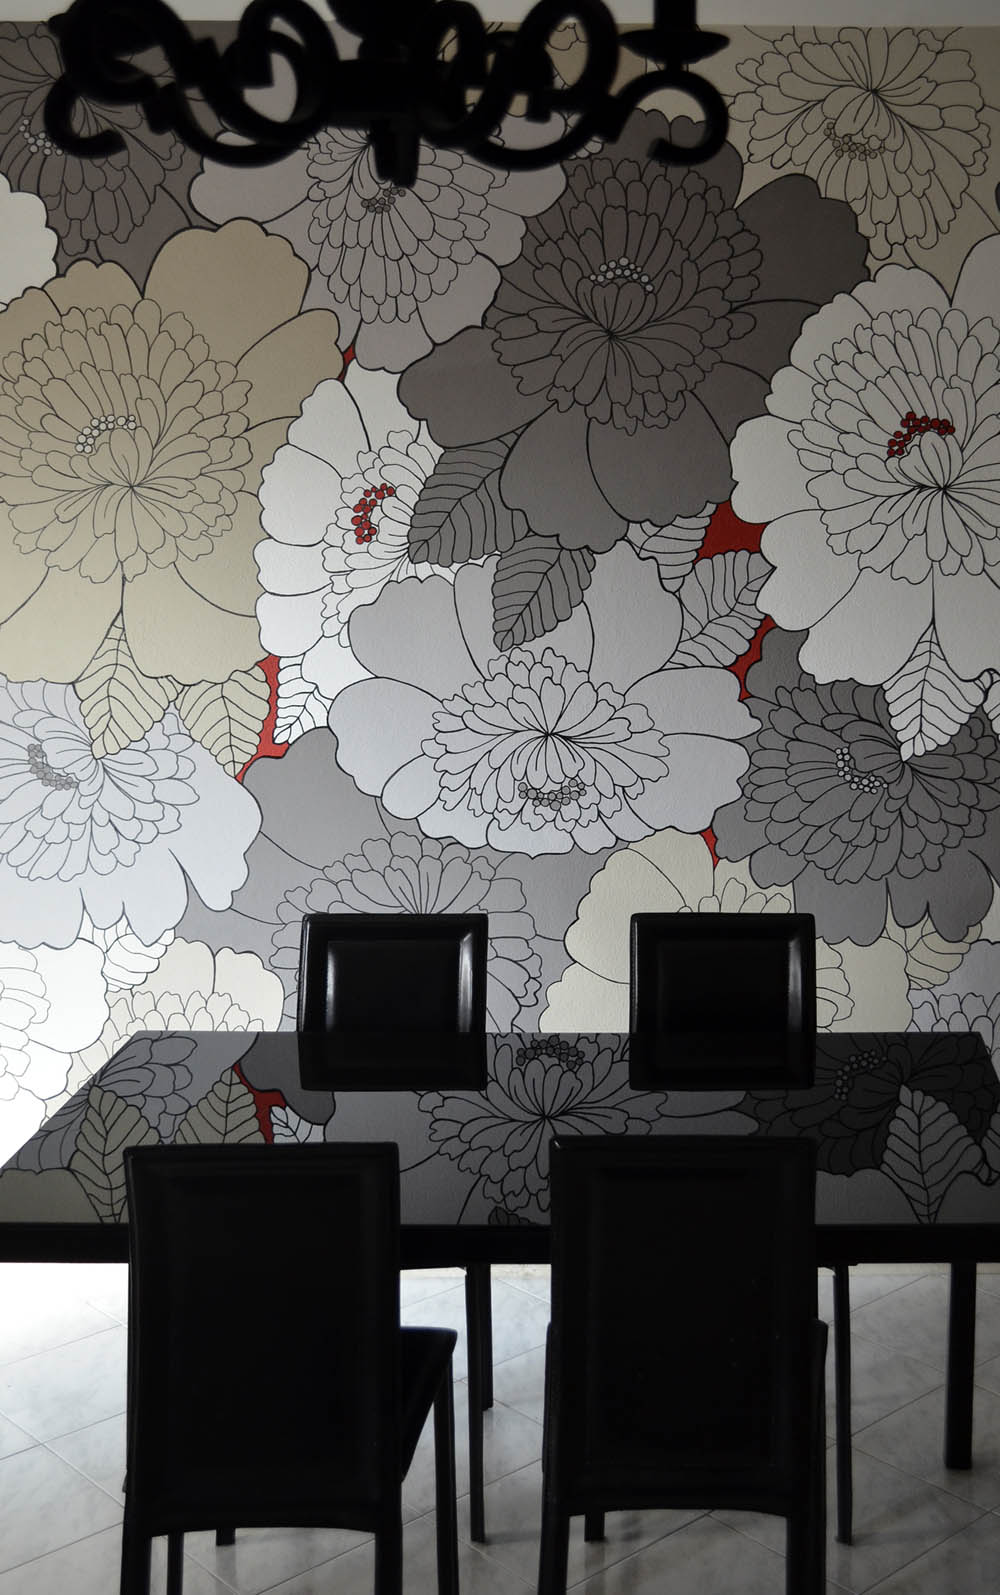 wonderland-parete-dipinta-fiori-decorazione (9)